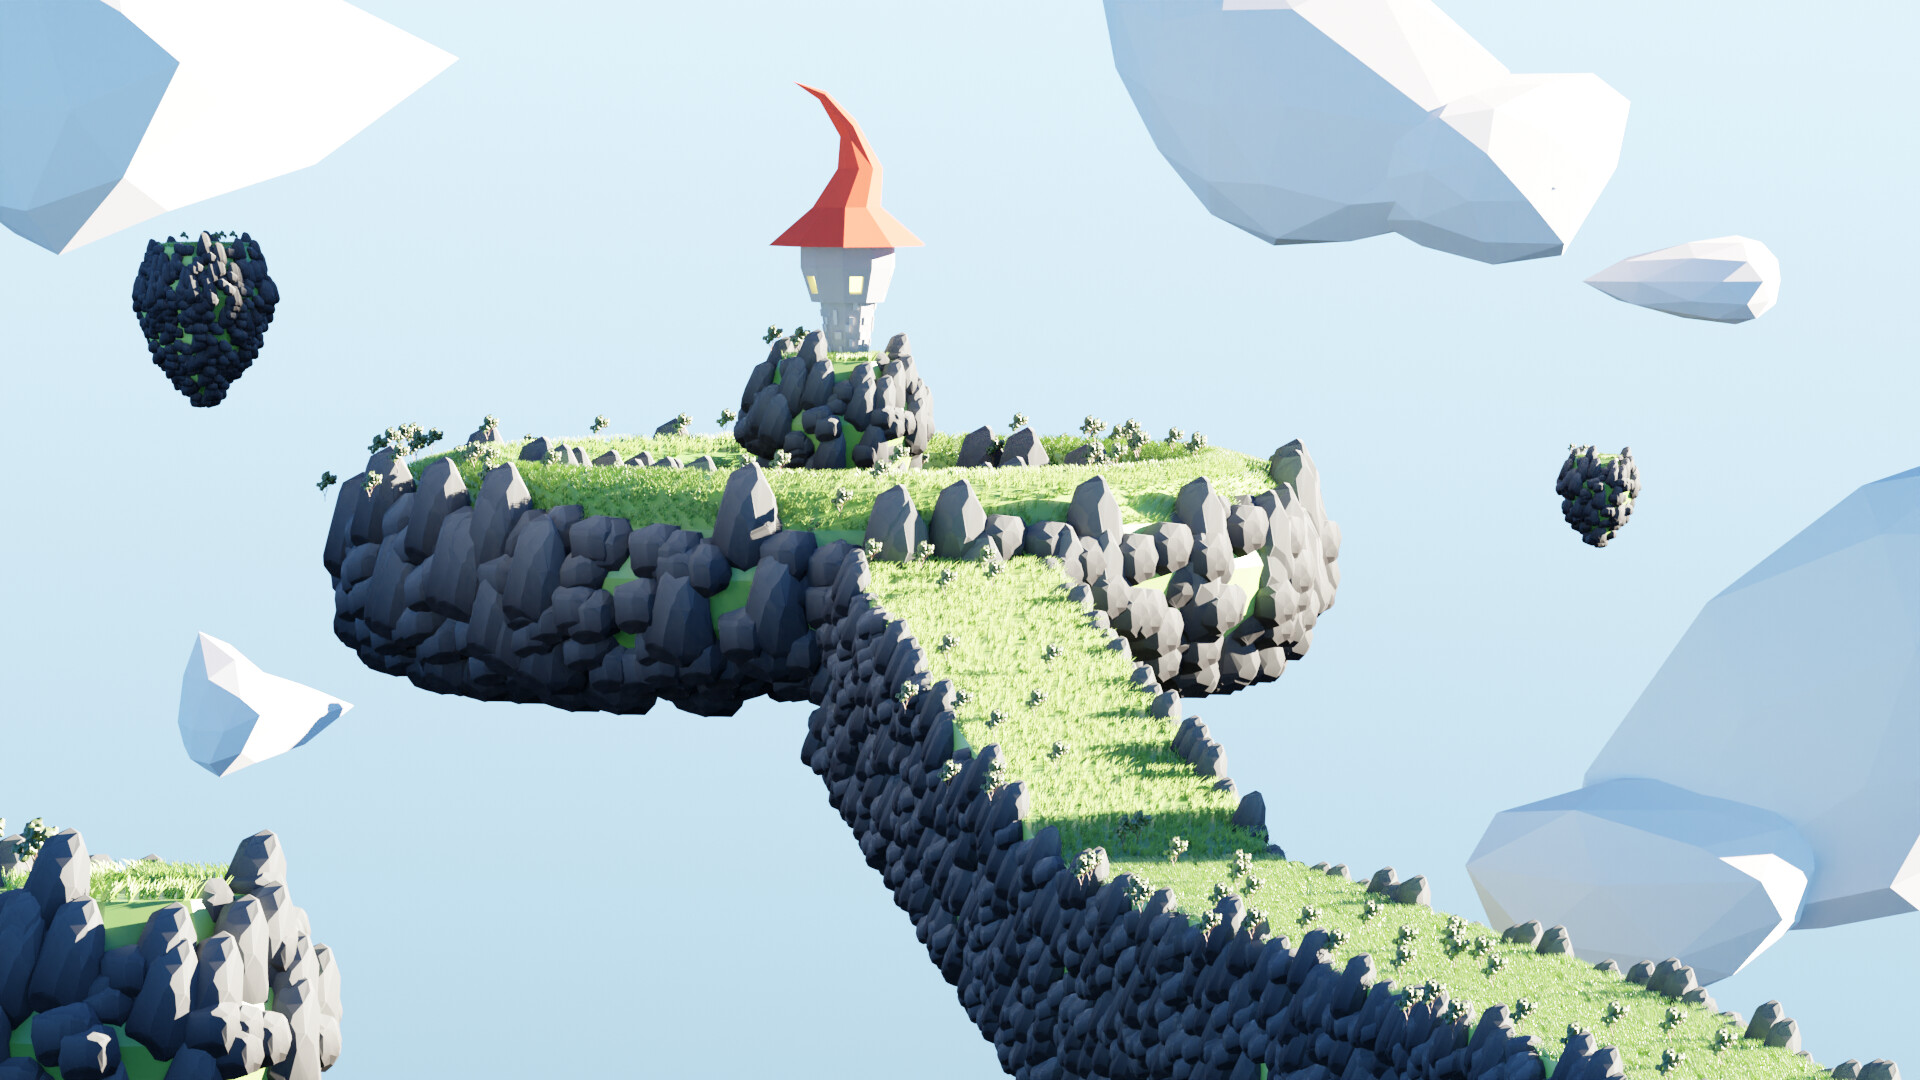 ArtStation - Wizard tower island